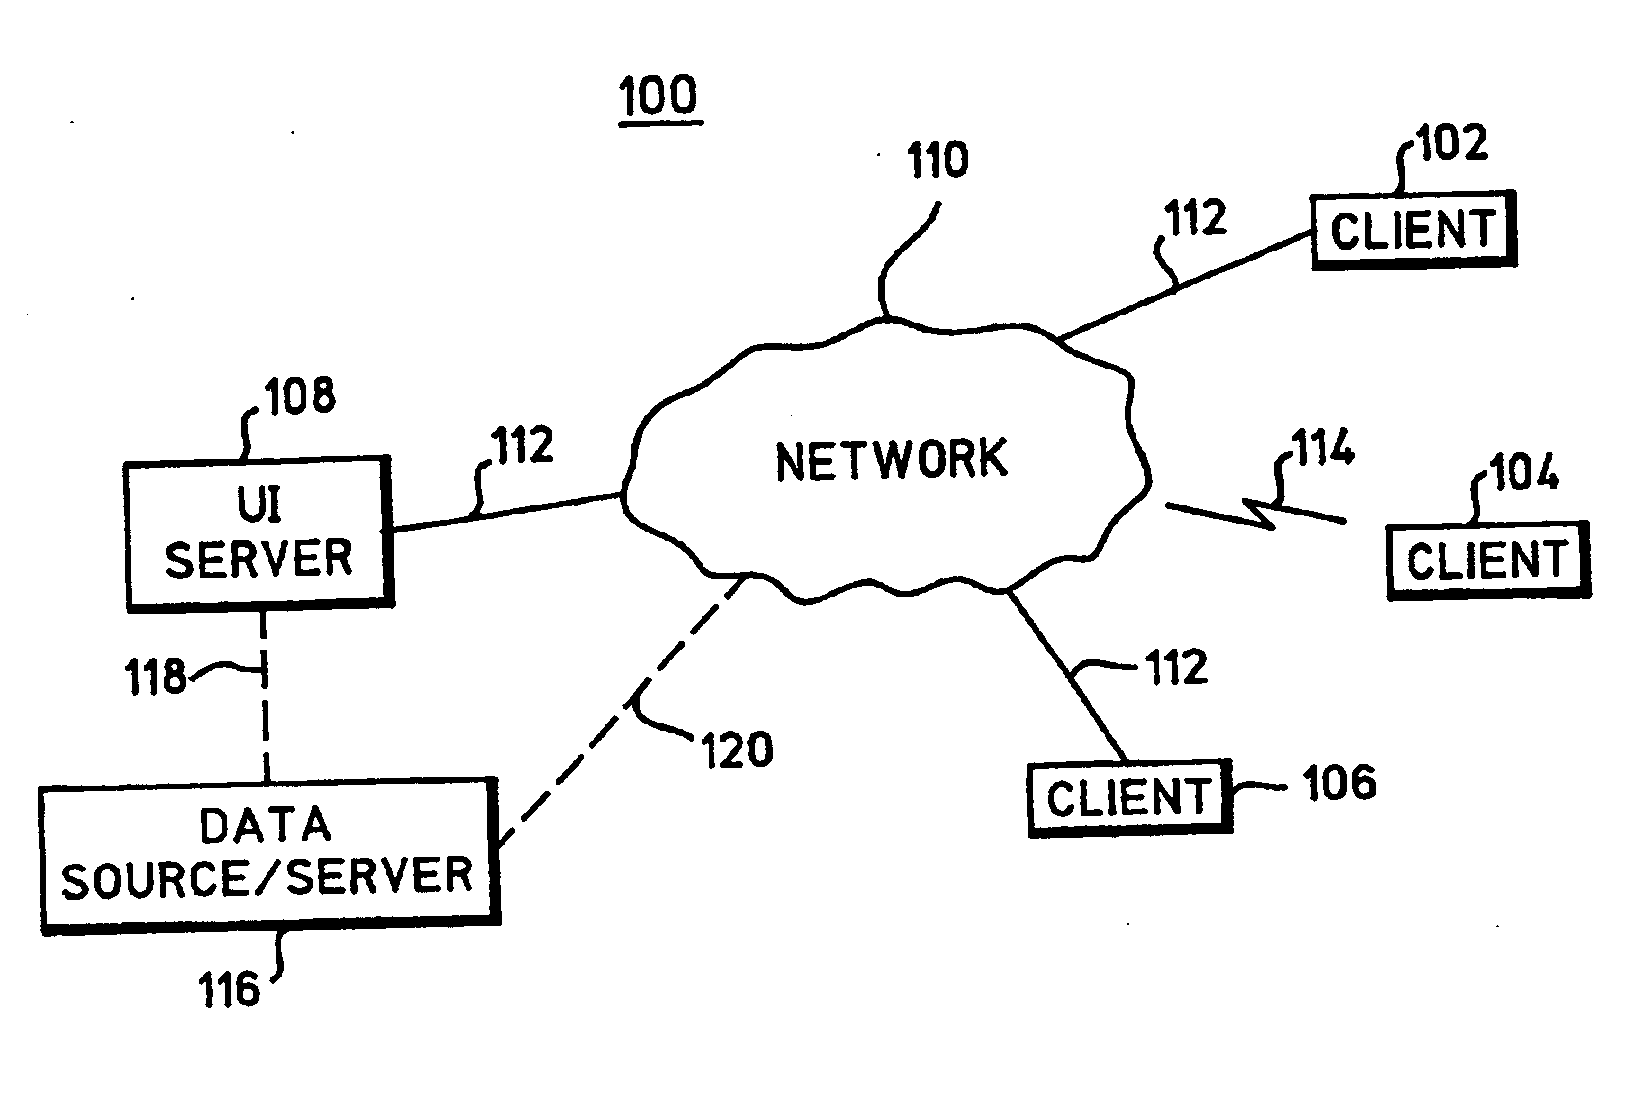 Platform-independent distributed user interface server architecture